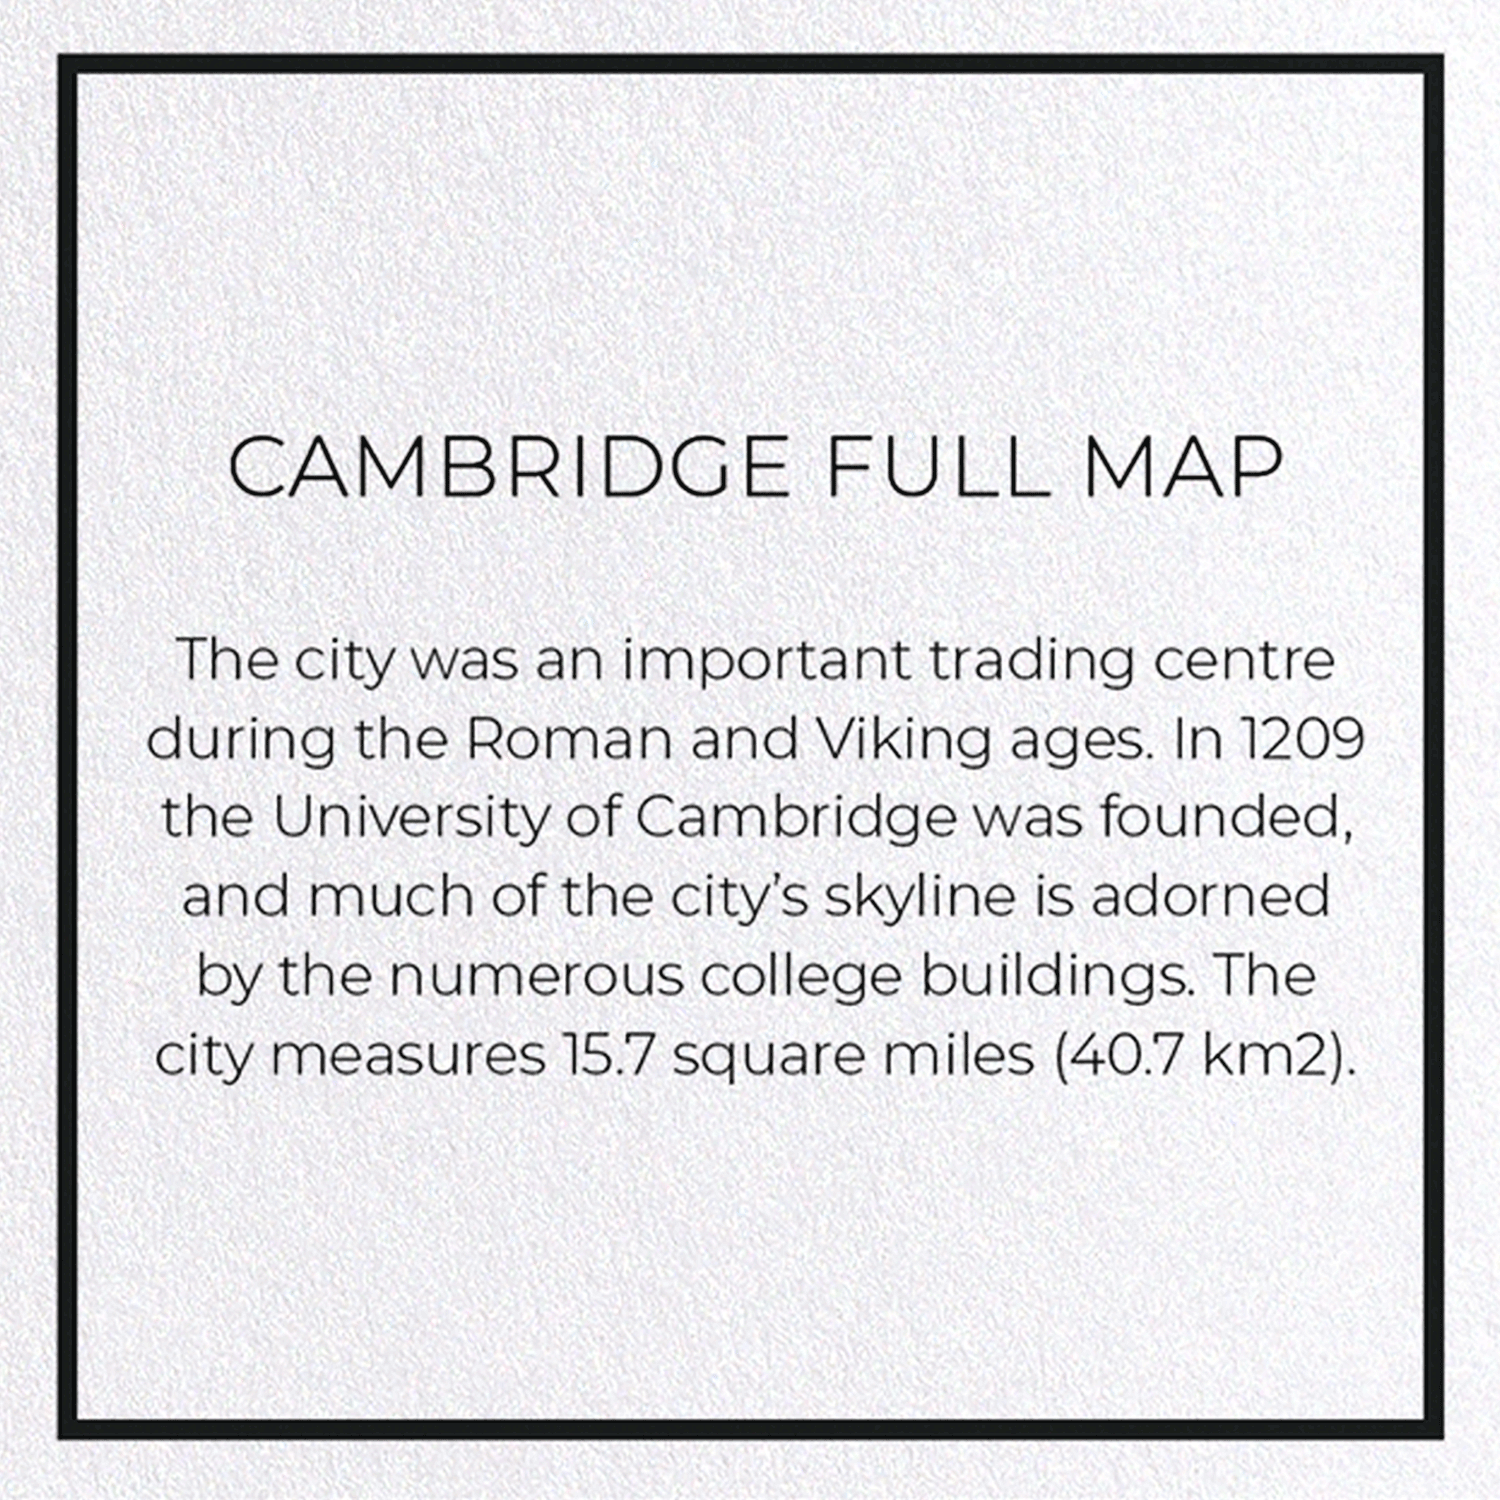 CAMBRIDGE FULL MAP